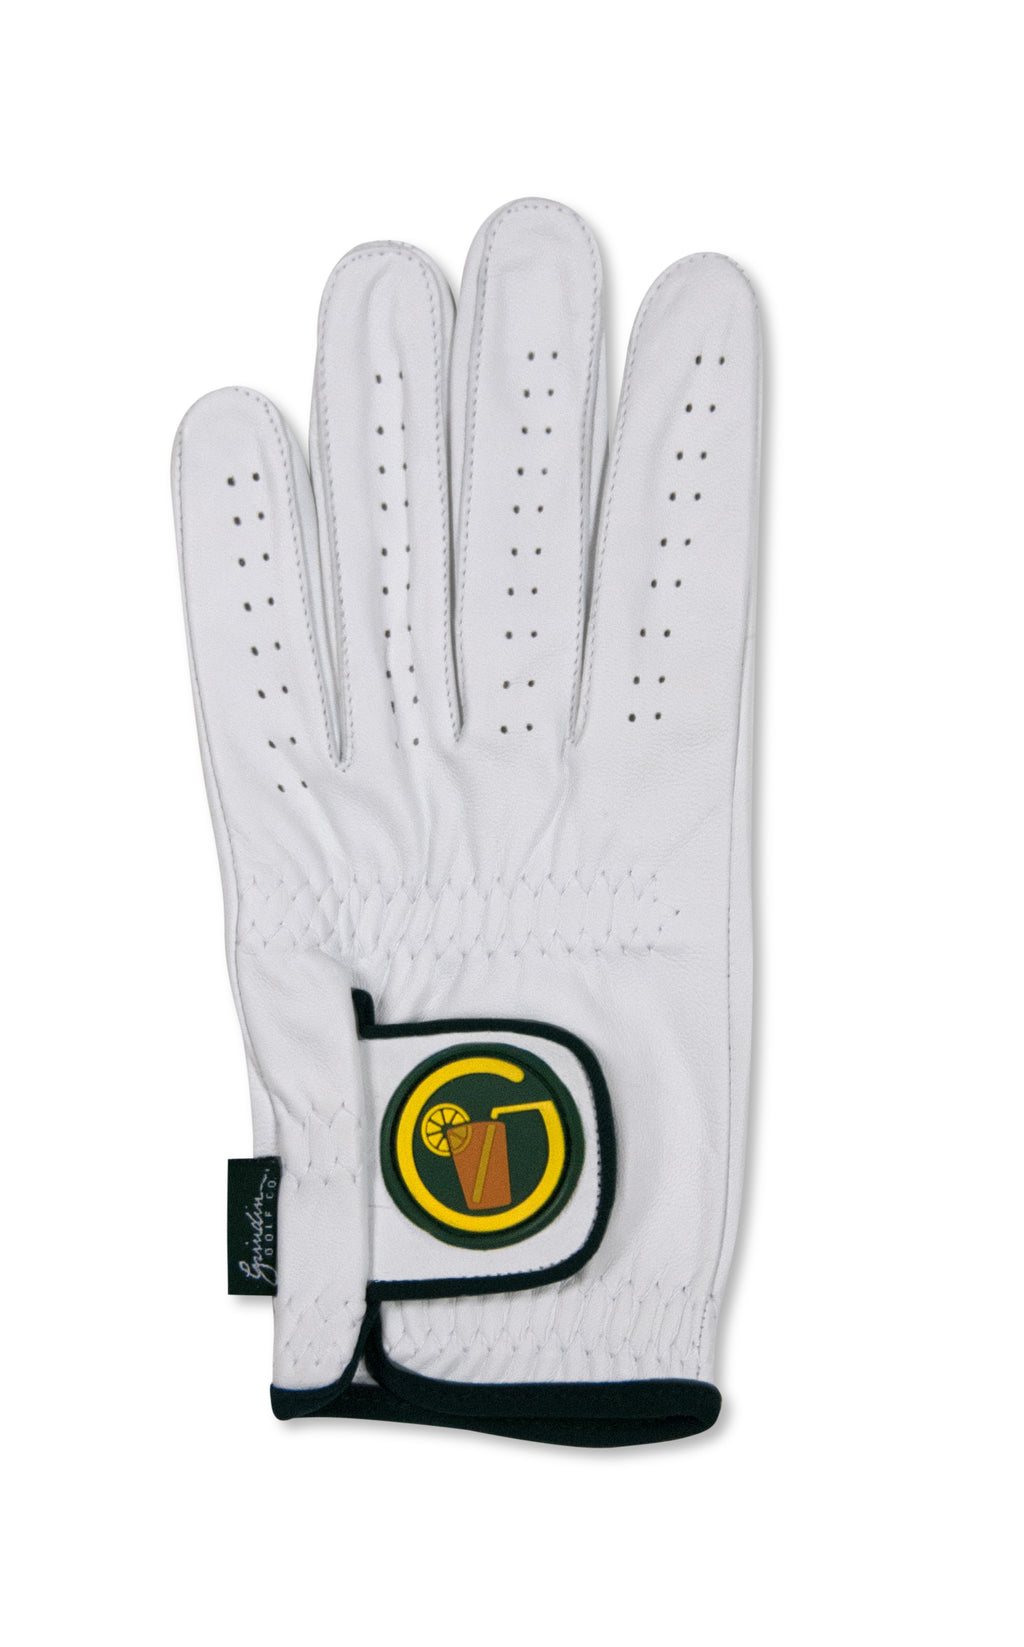 Circle "SWEET" Tea Logo - White  Cabretta Leather Golf Glove